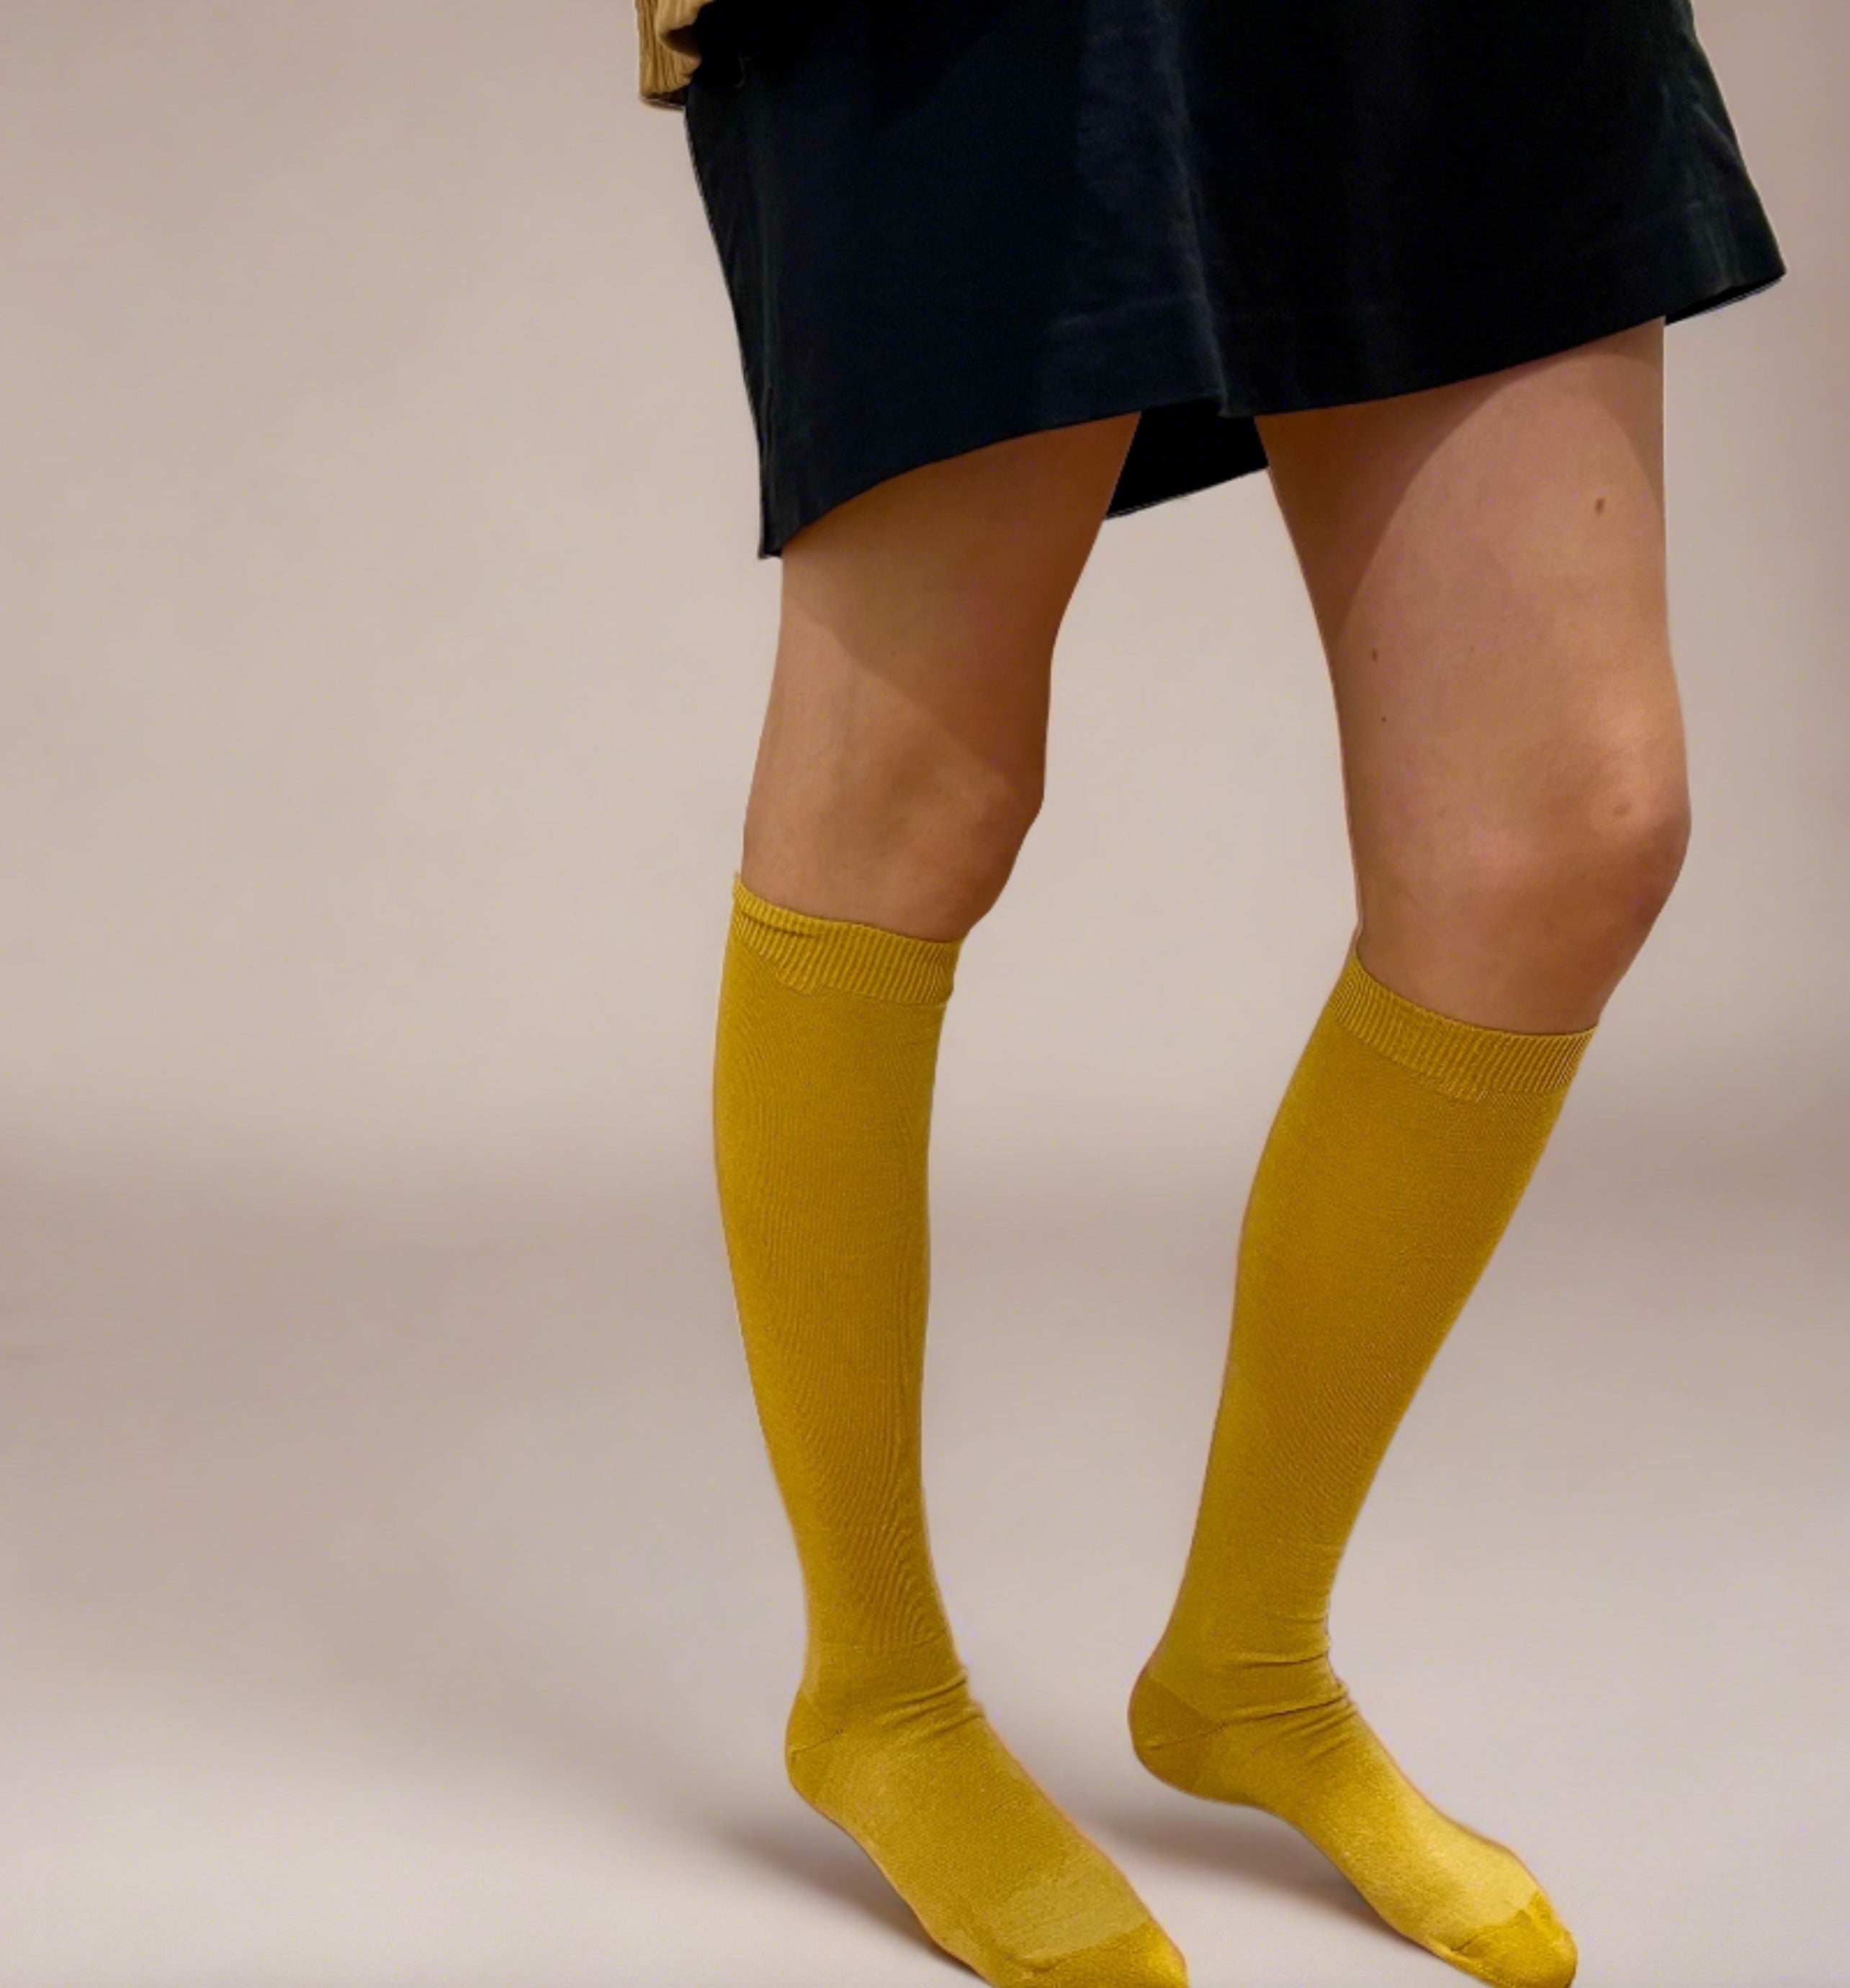 Merino Wool Women's Knee High Socks in Mustard - Aussie Made - The Sockery